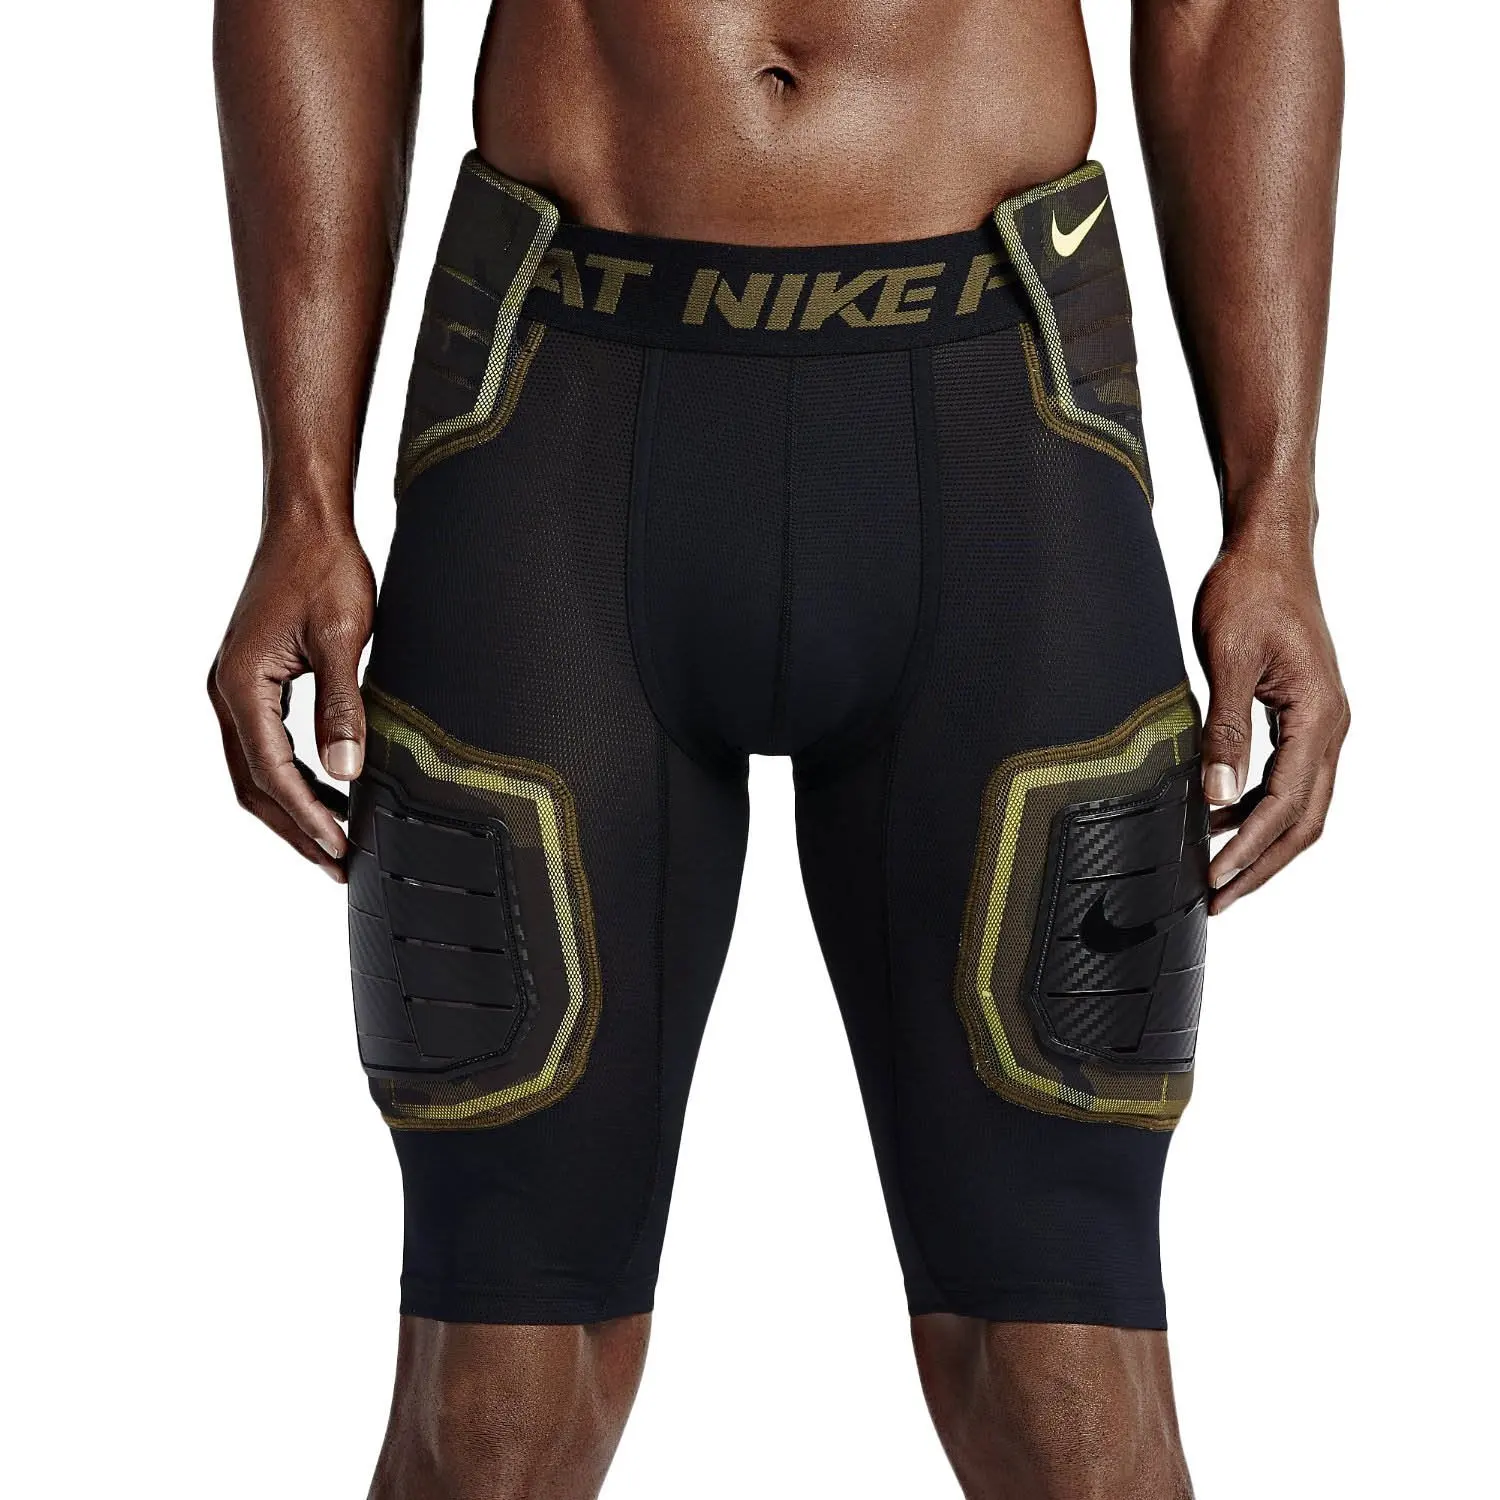 nike football compression shorts